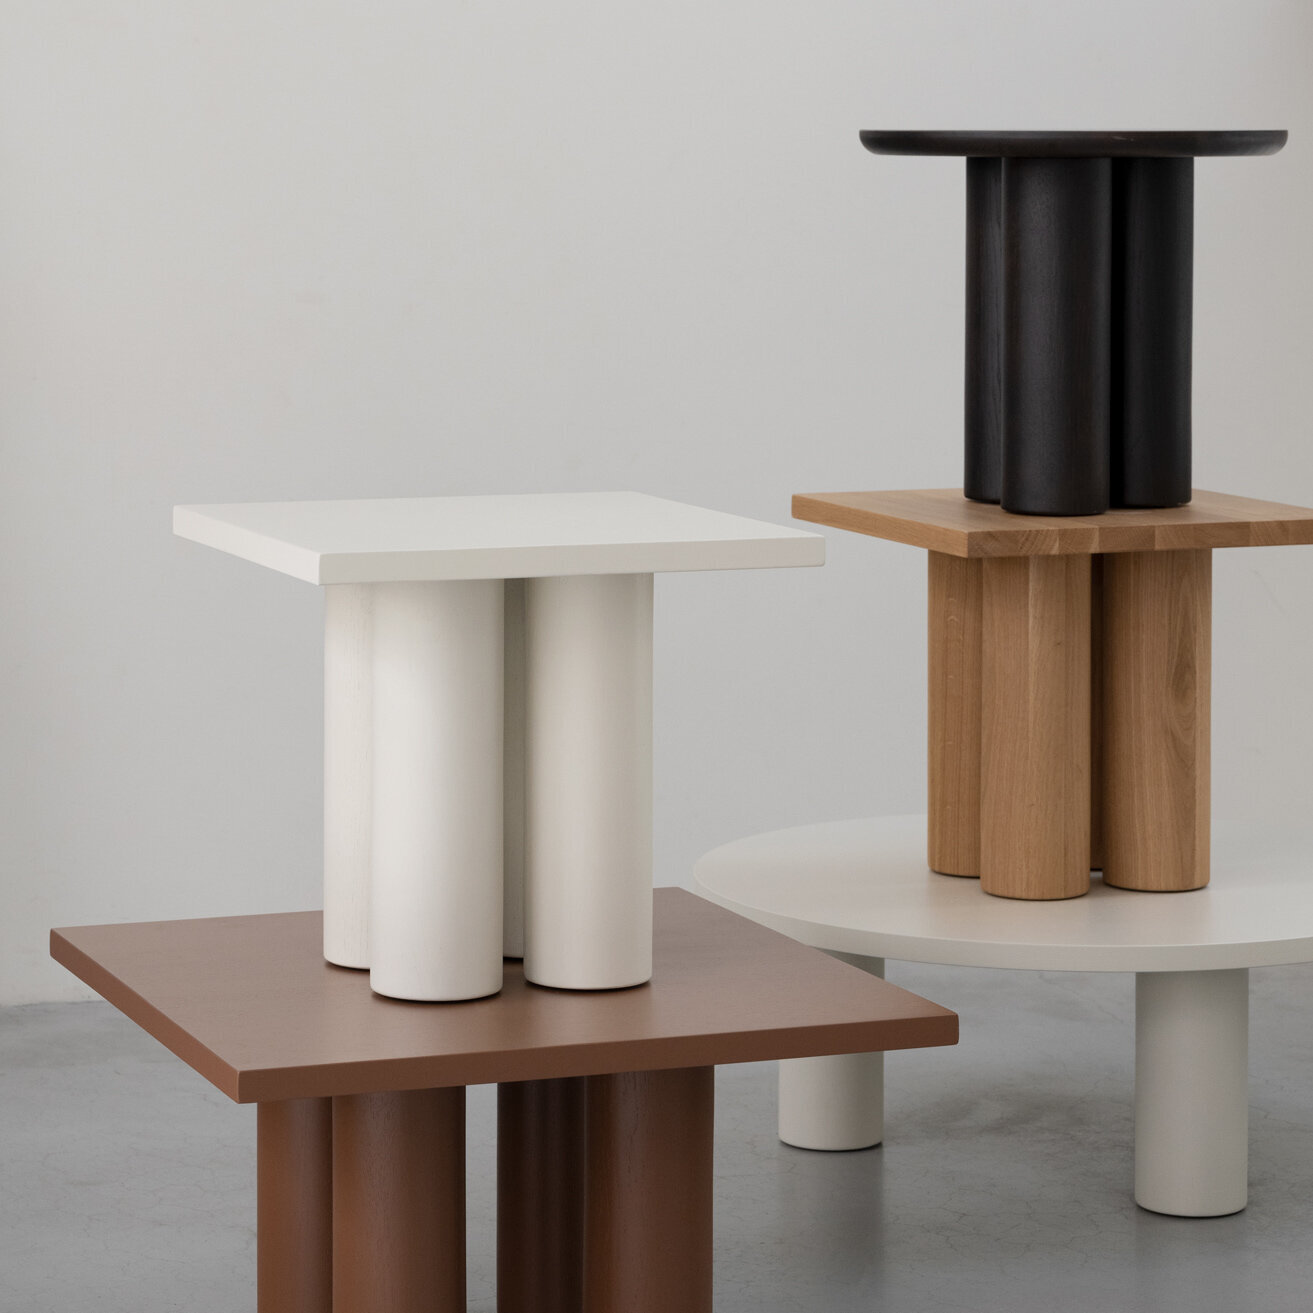 Design Coffee Table | Pillar Coffee Table Square 50 Oak hardwax oil natural 3062 | Oak hardwax oil natural 3062 | Studio HENK| 